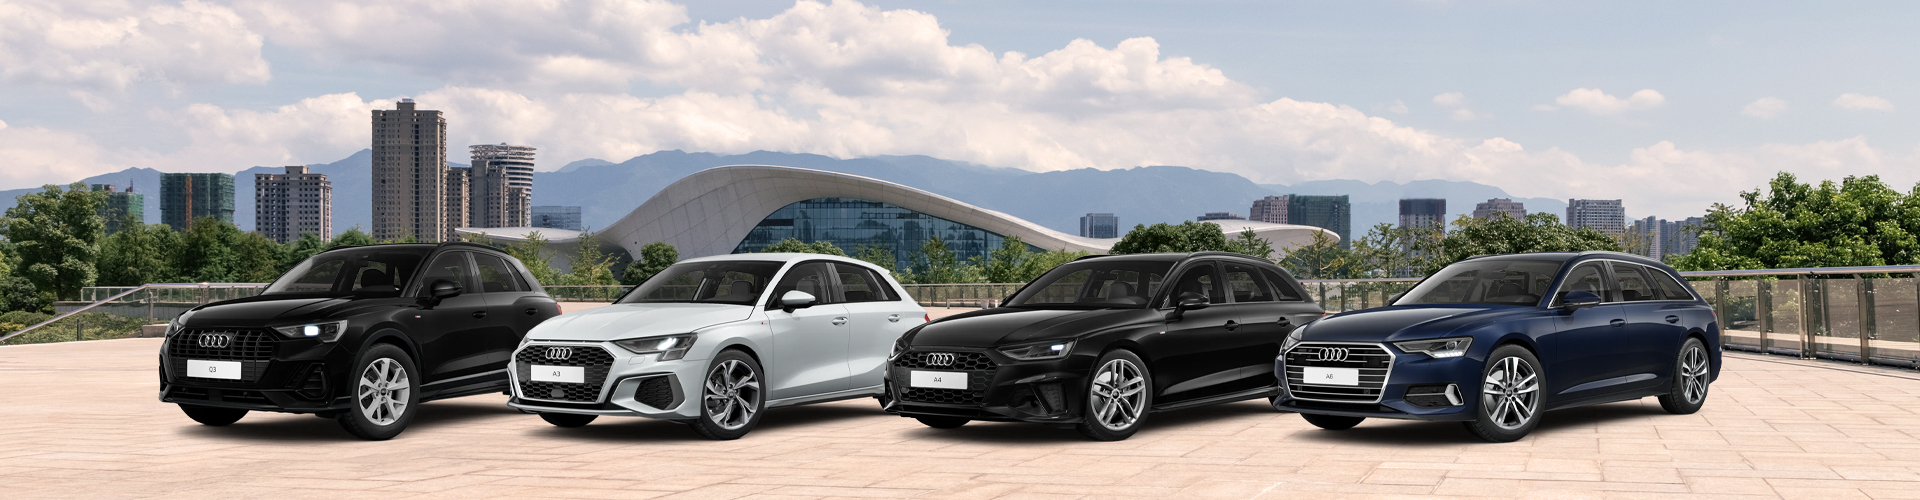 Audi Sommermaßnahme Gebrauchtwagen Angebote